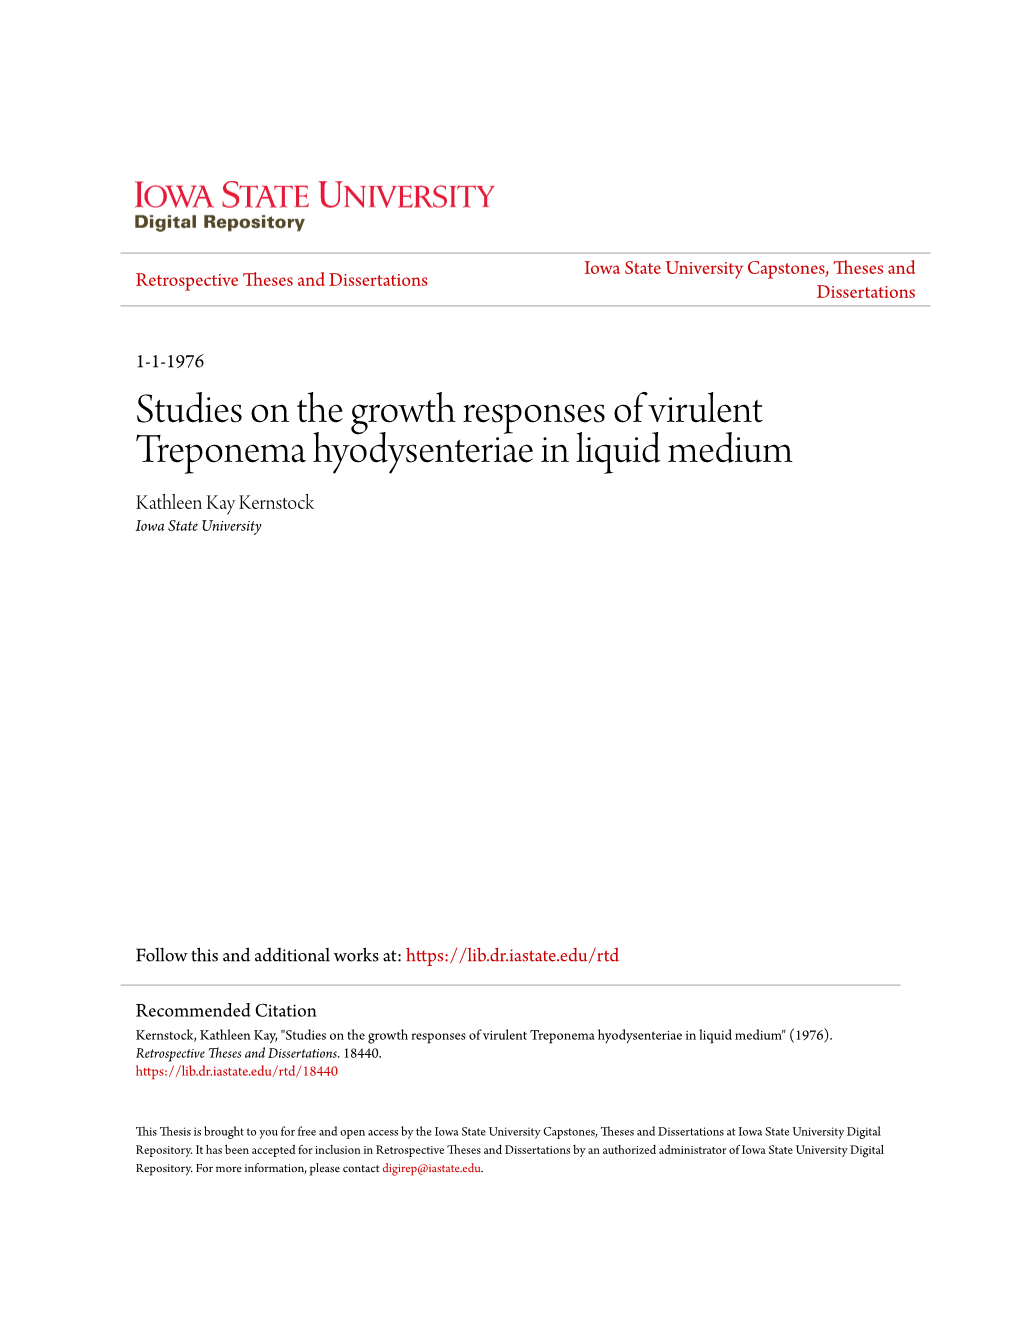 Studies on the Growth Responses of Virulent Treponema Hyodysenteriae in Liquid Medium Kathleen Kay Kernstock Iowa State University